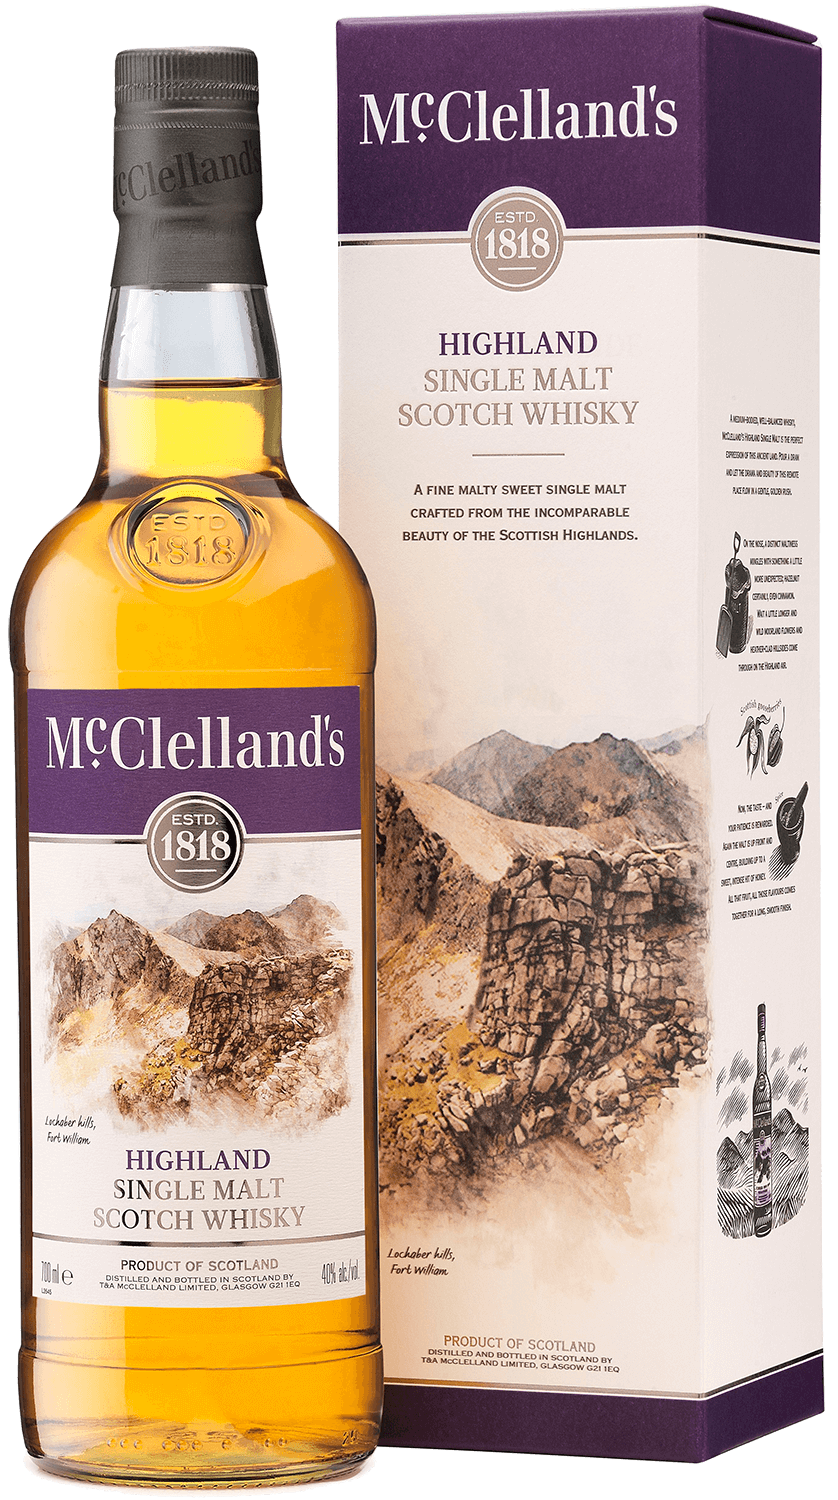 highland queen majesty single malt scotch whisky 16 y o gift box McClelland's Highland single malt scotch whisky (gift box)